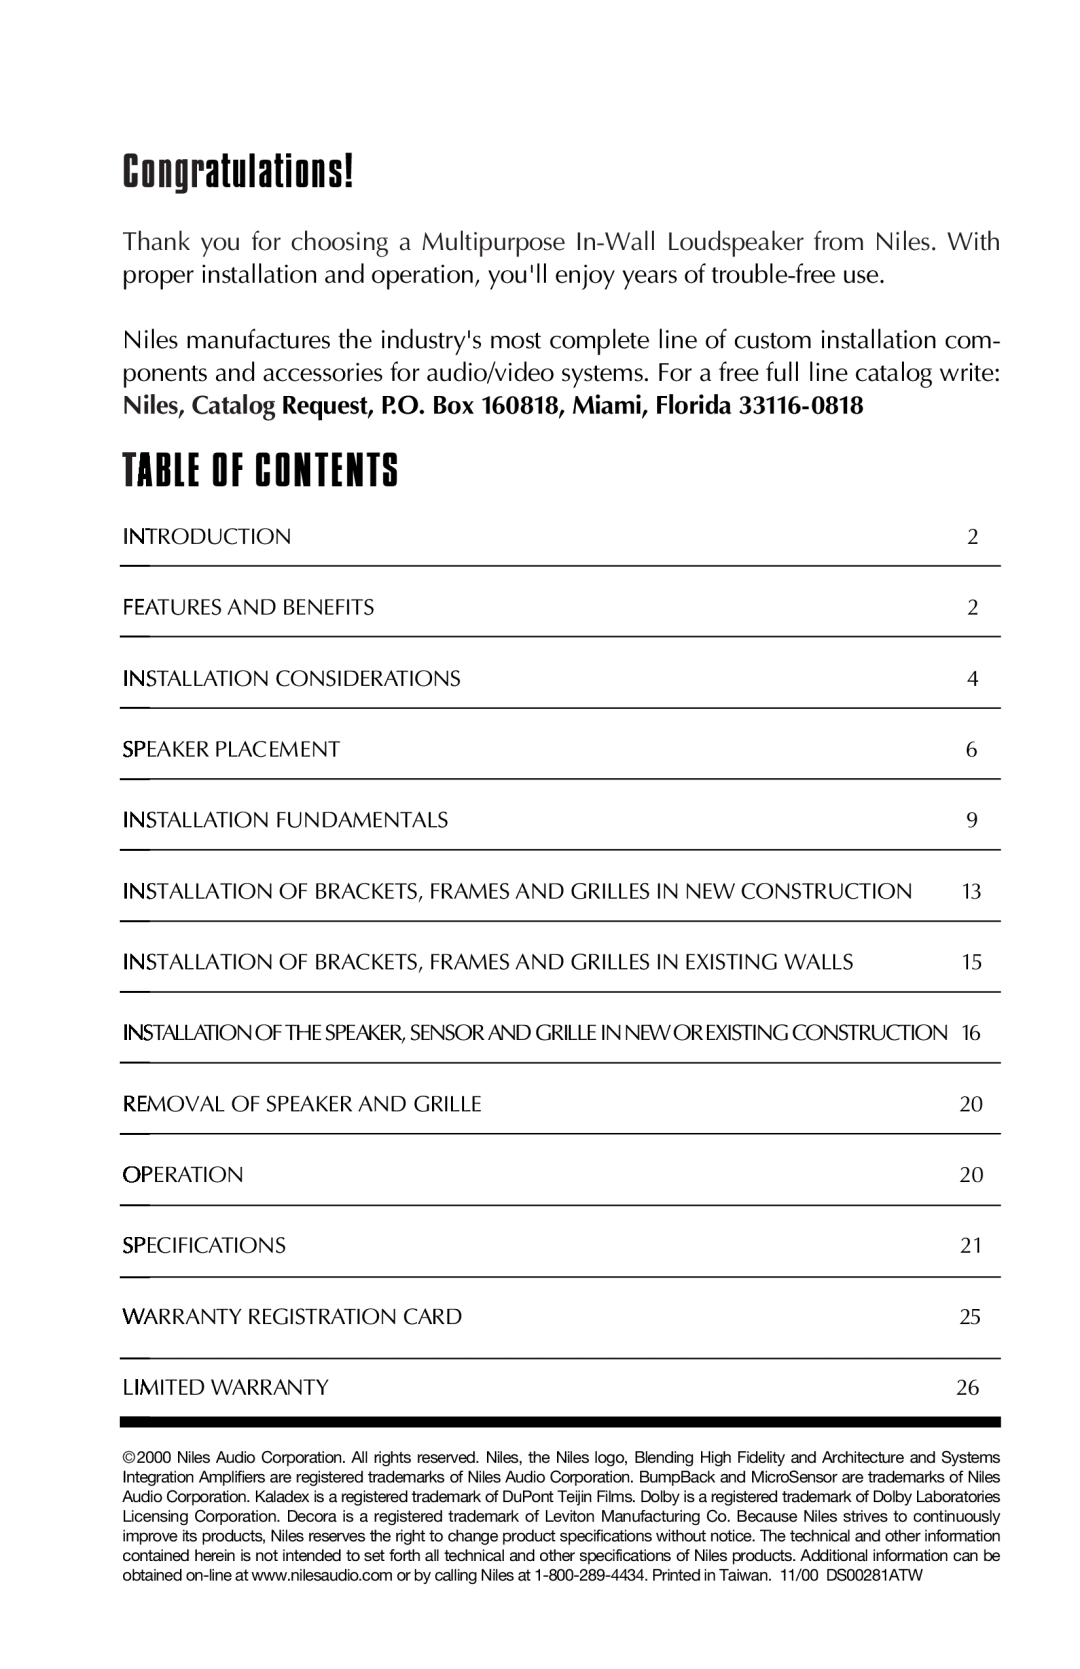 Niles Audio MP6, MP5 manual Congratulations, Table Of Contents 